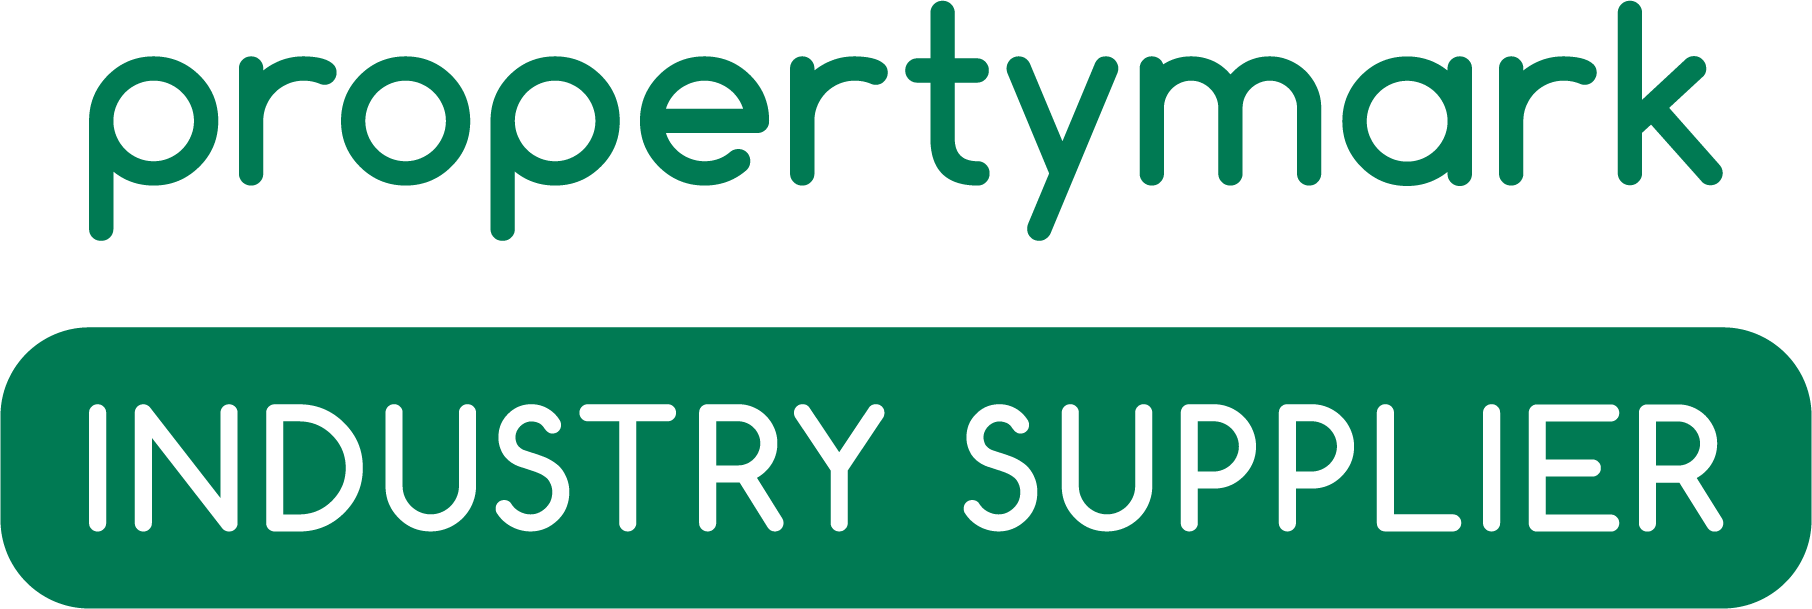 Inventory Base joins Propertymark’s Industry Supplier platform  